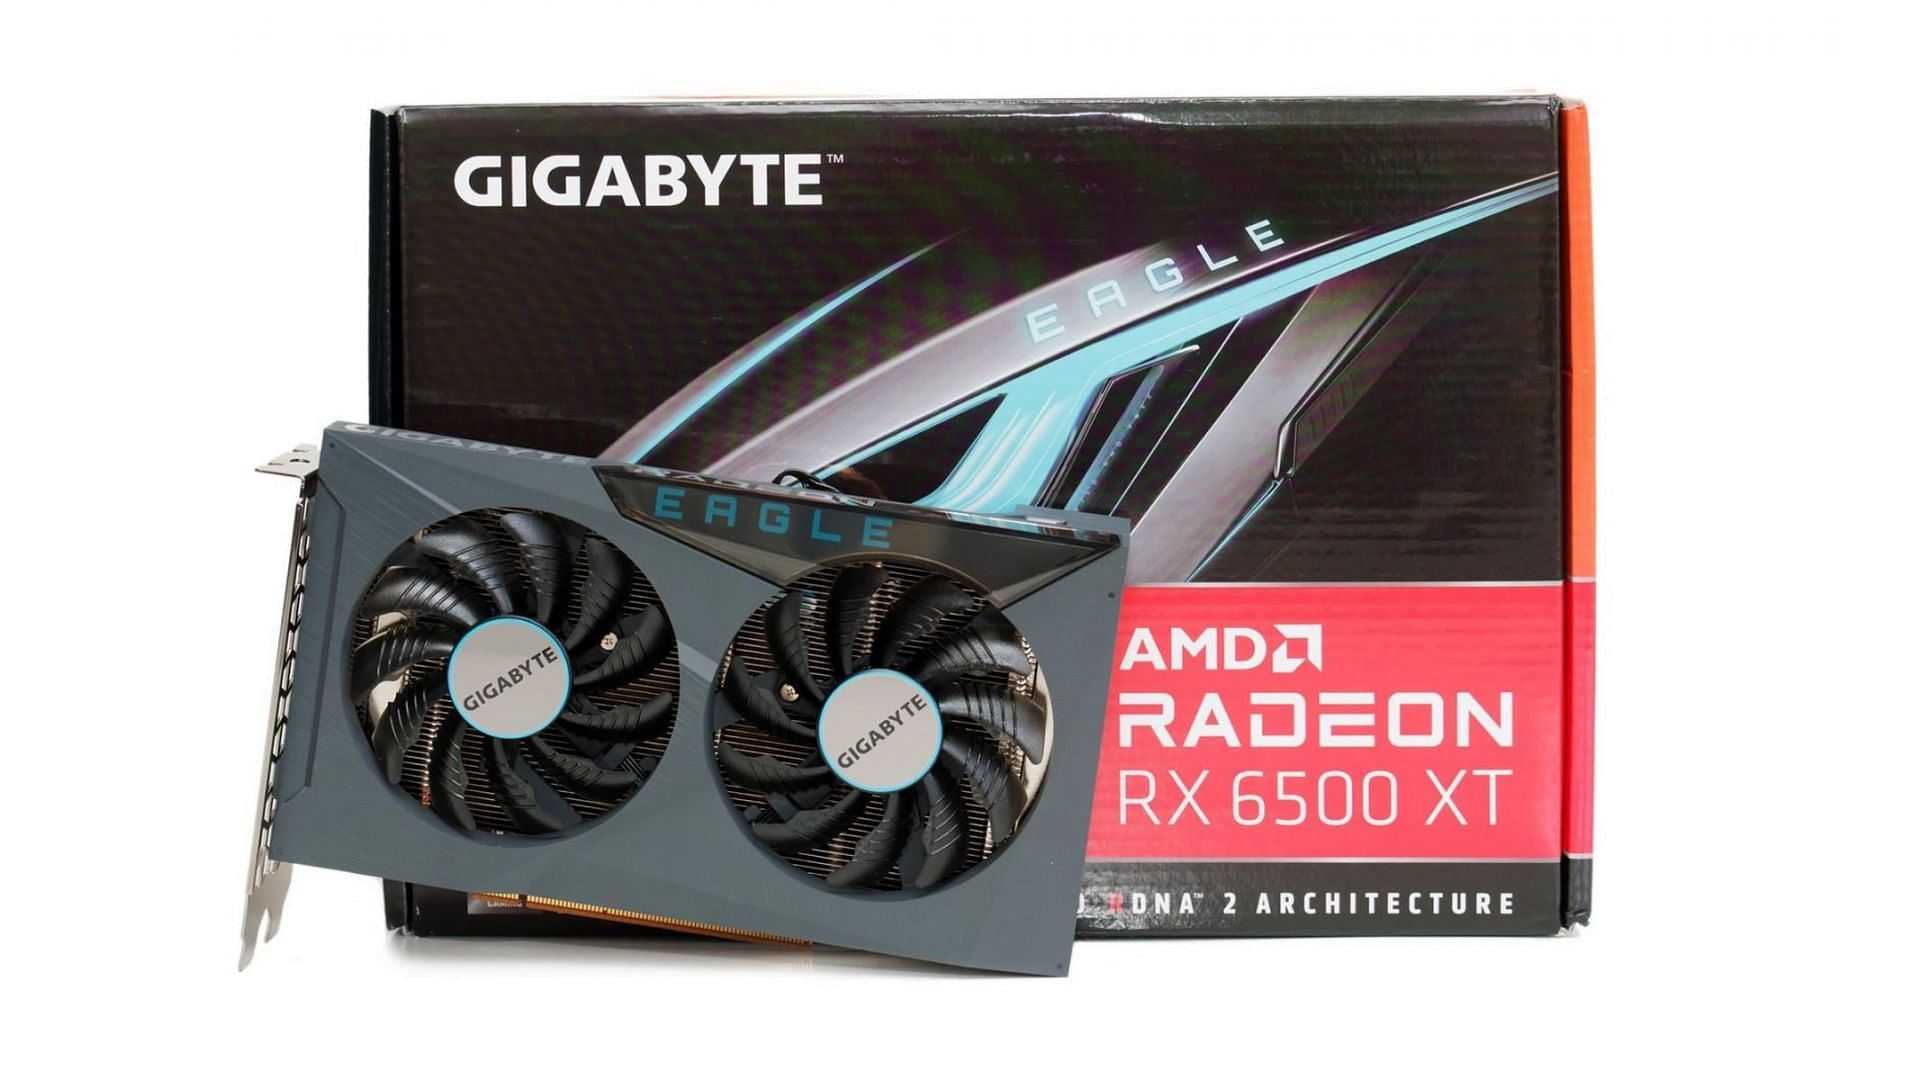 The AMD Radeon RX 6500 XT (Image via Amazon)